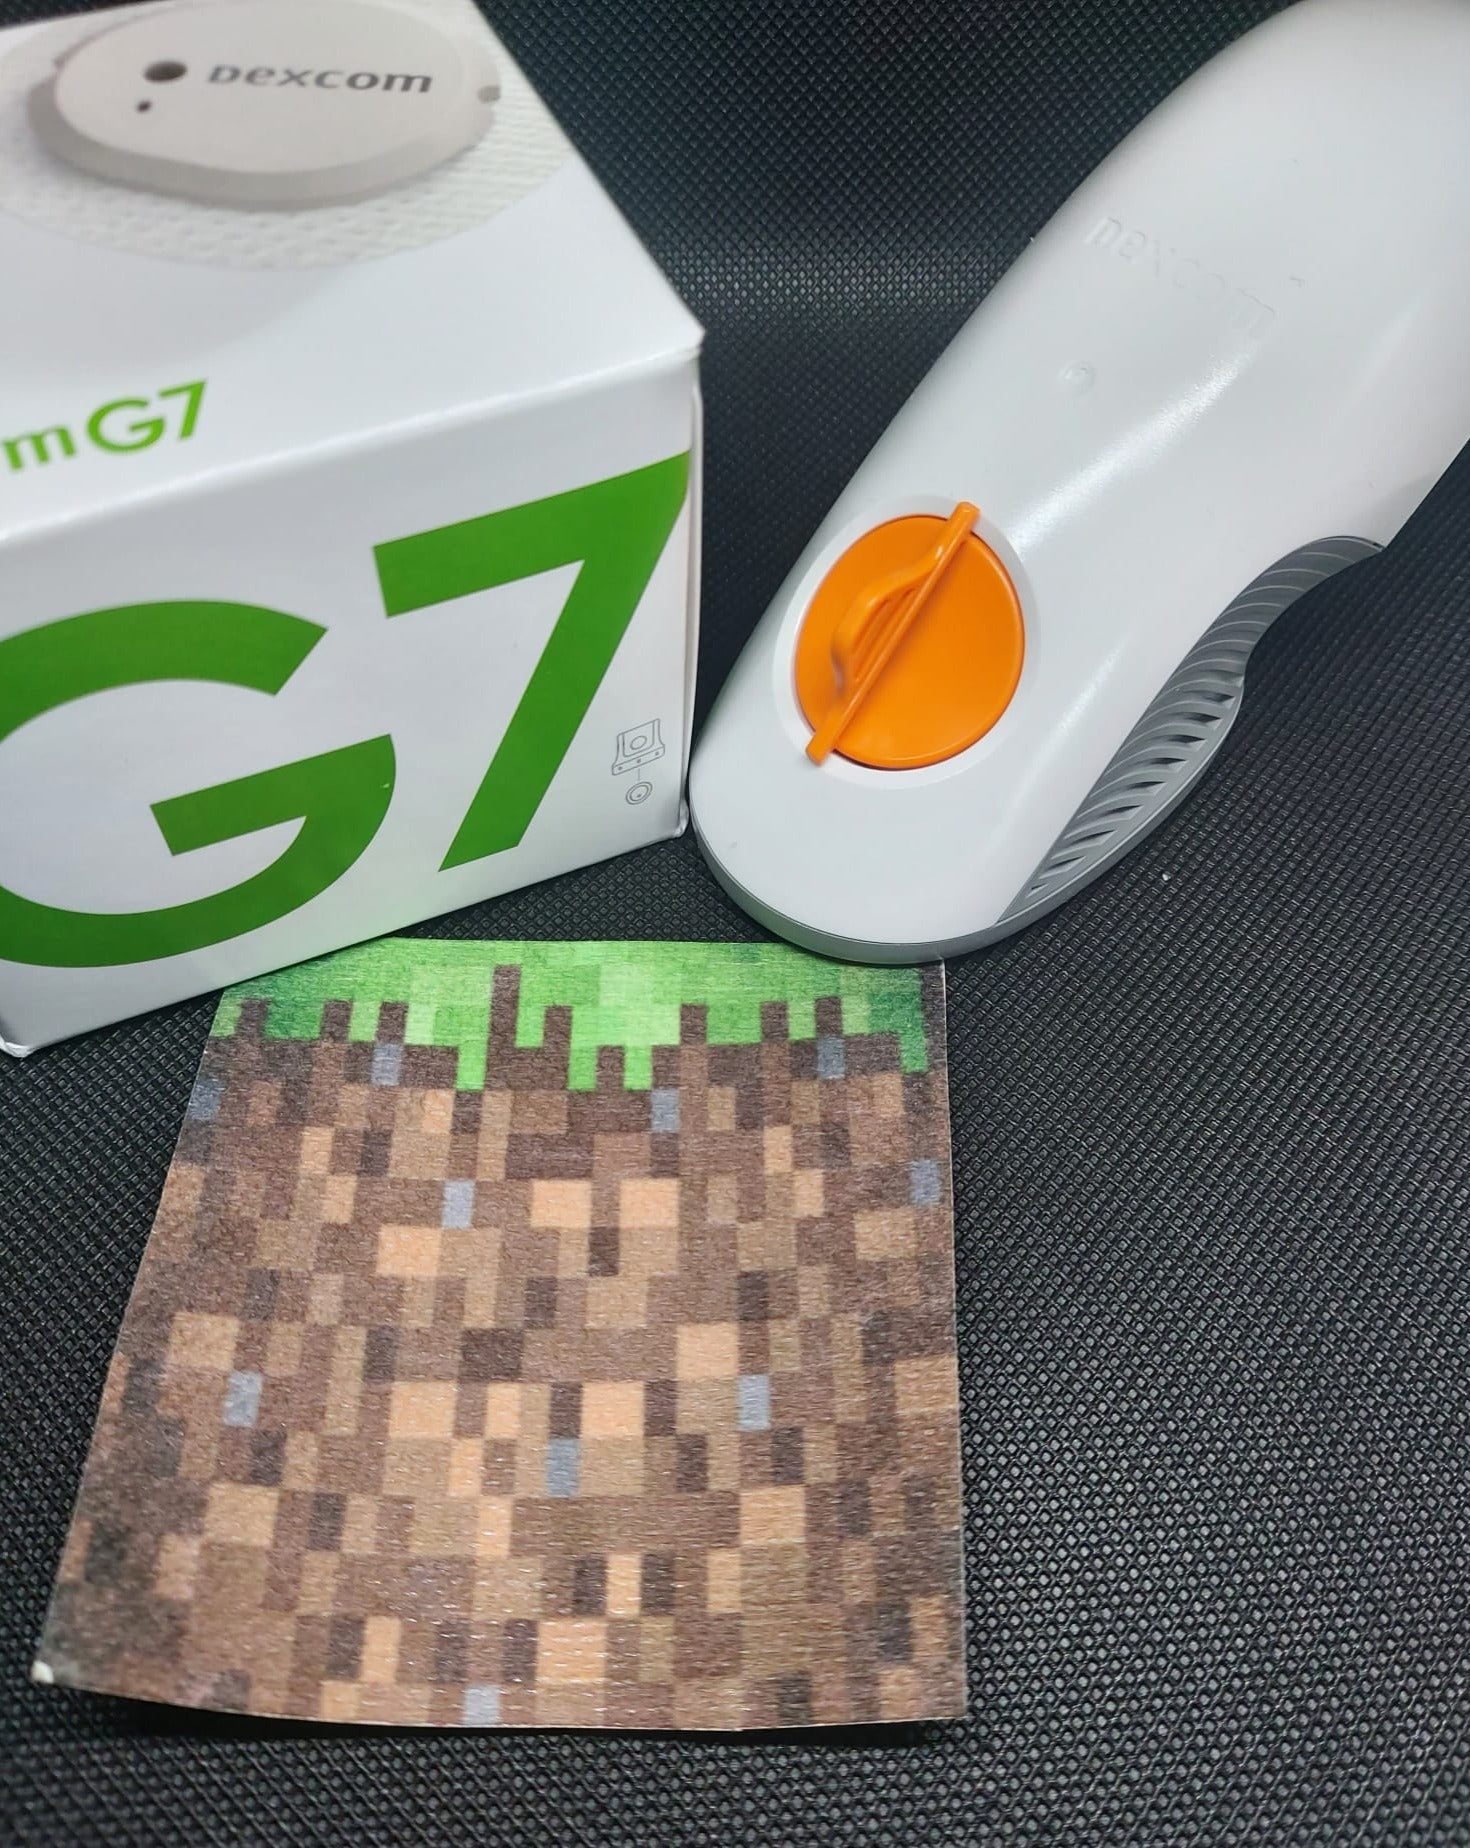 Minecraft Patch - Dexcom G7